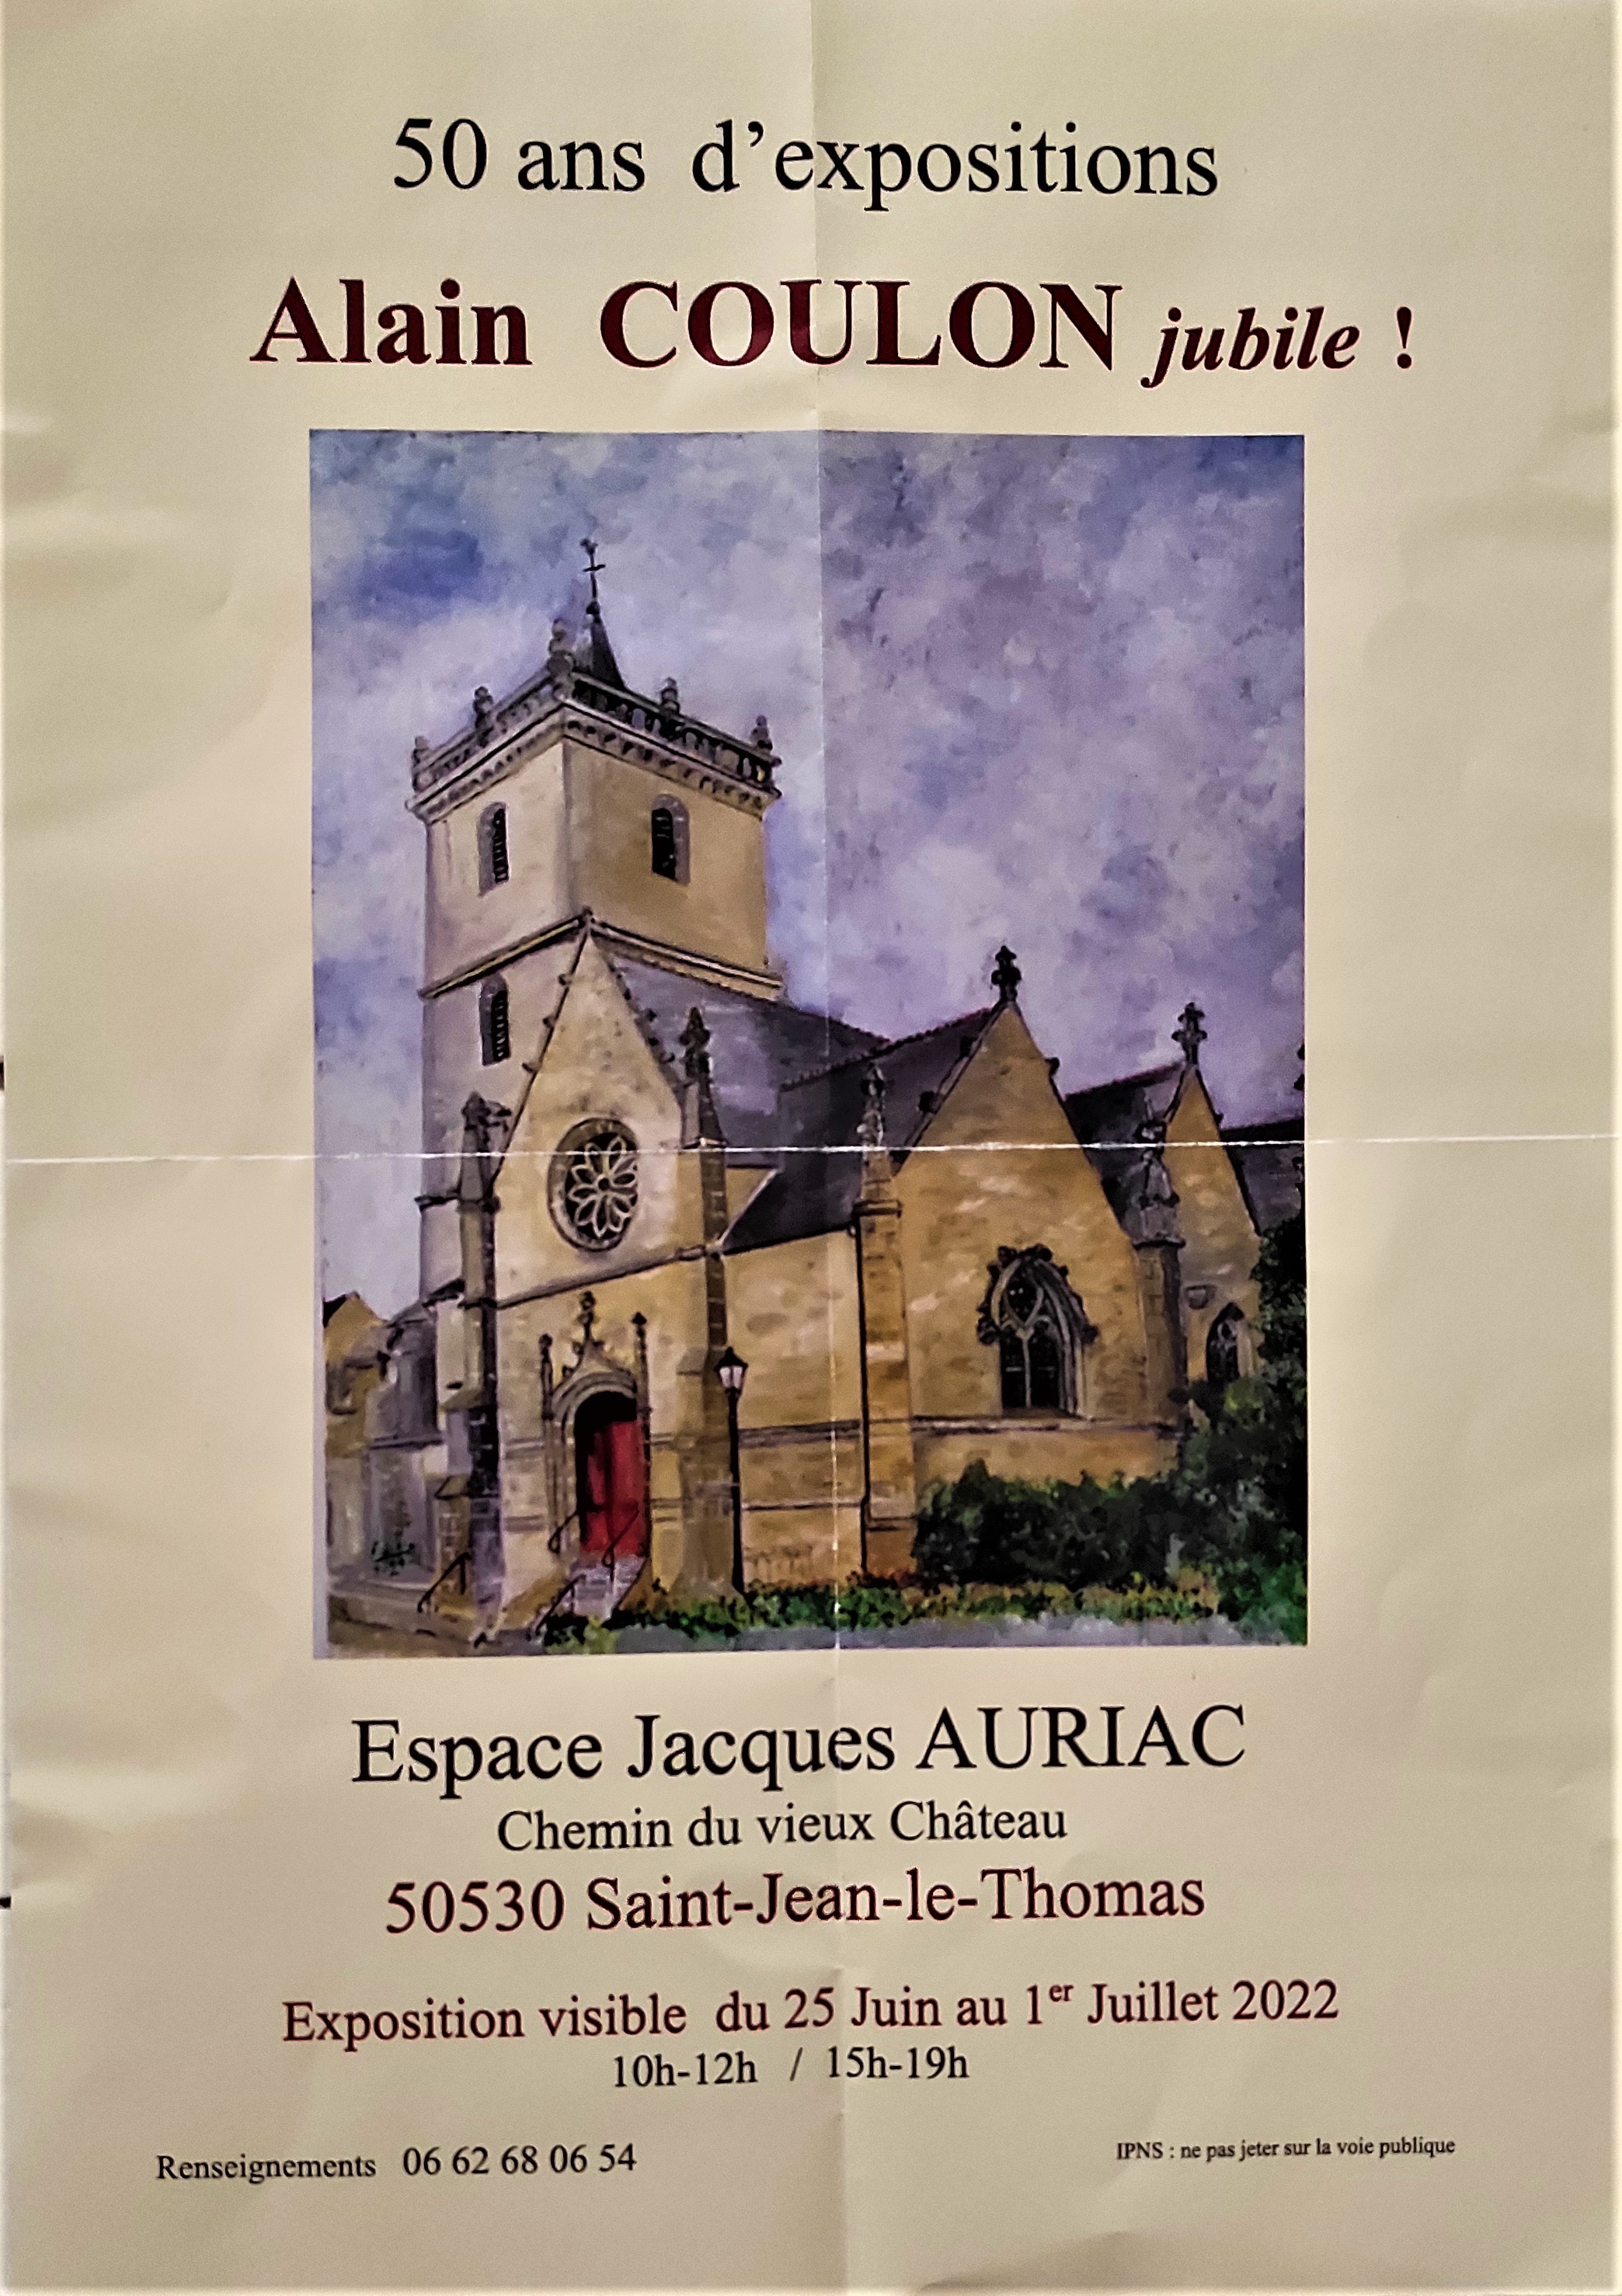 Exposition "Alain Coulon jubile"